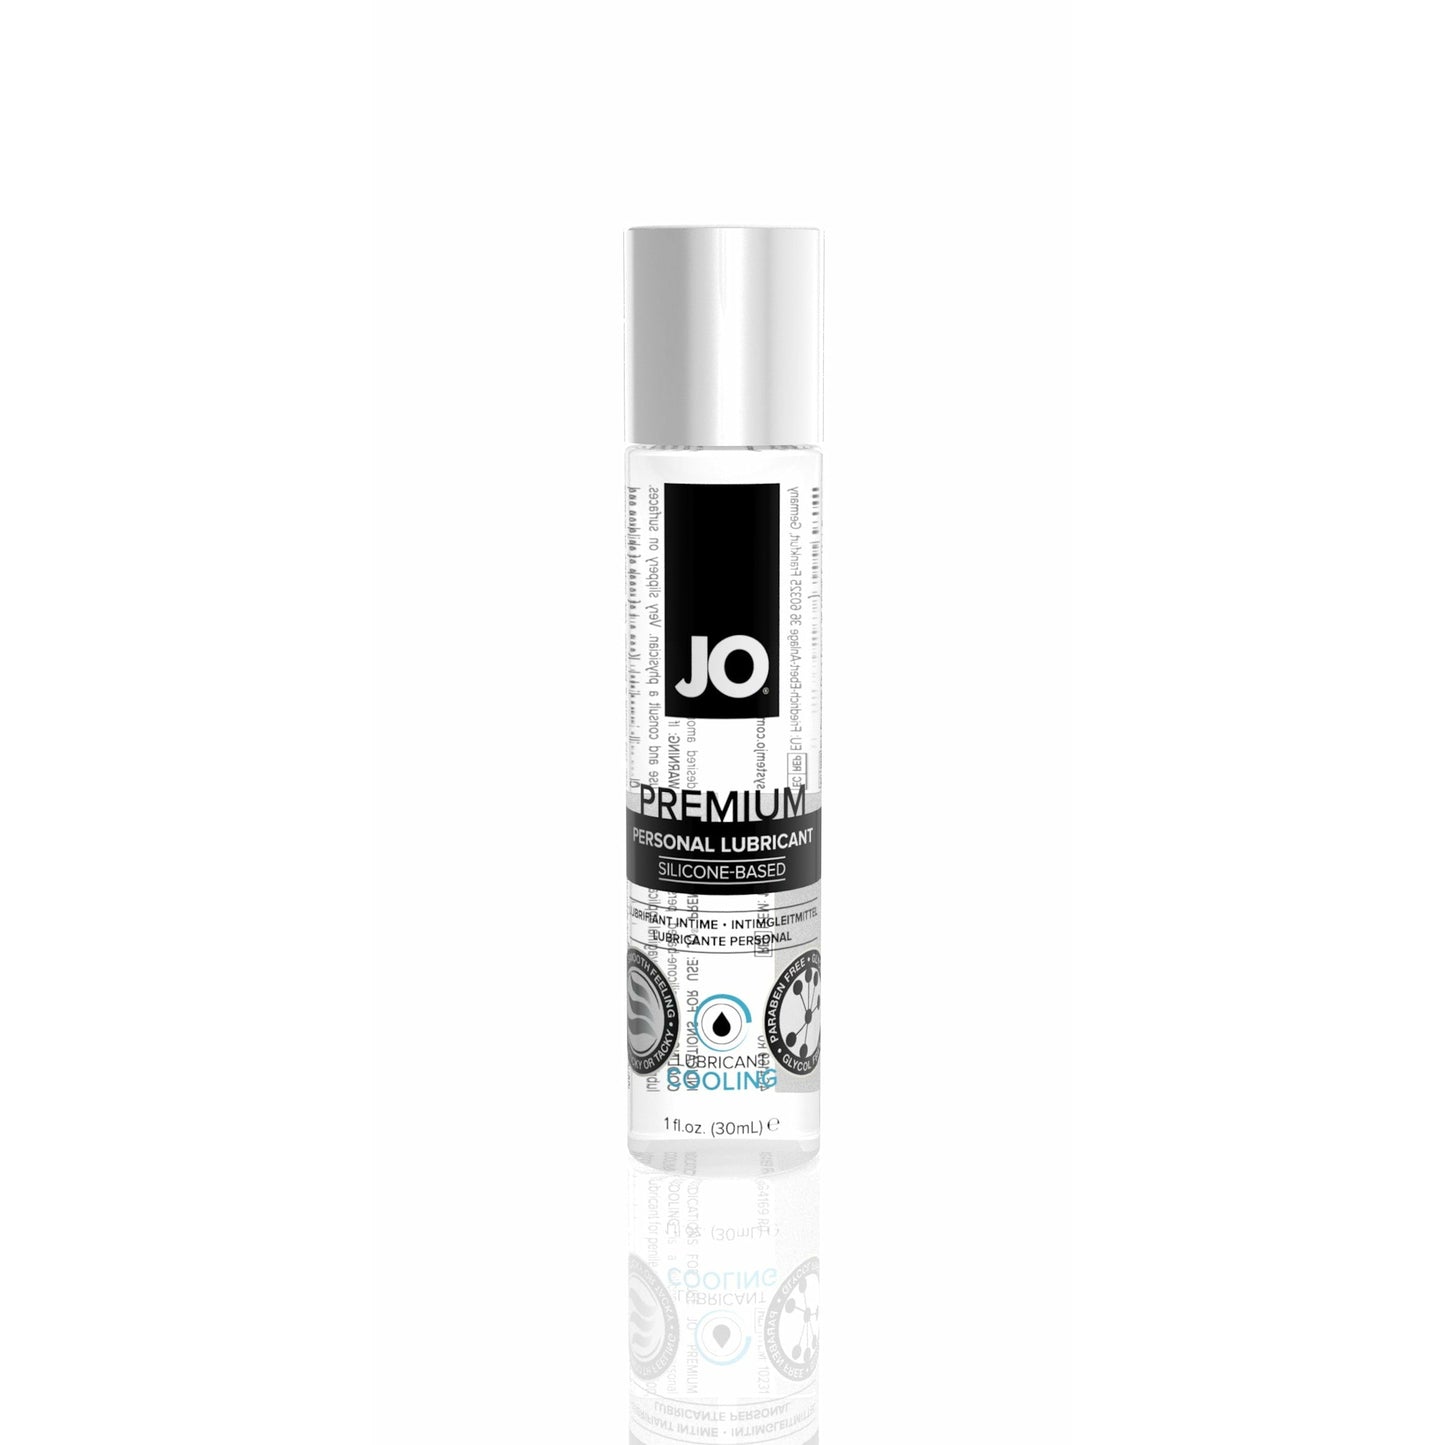 JO Premium Lubricant - Cooling 1oz / 30ml